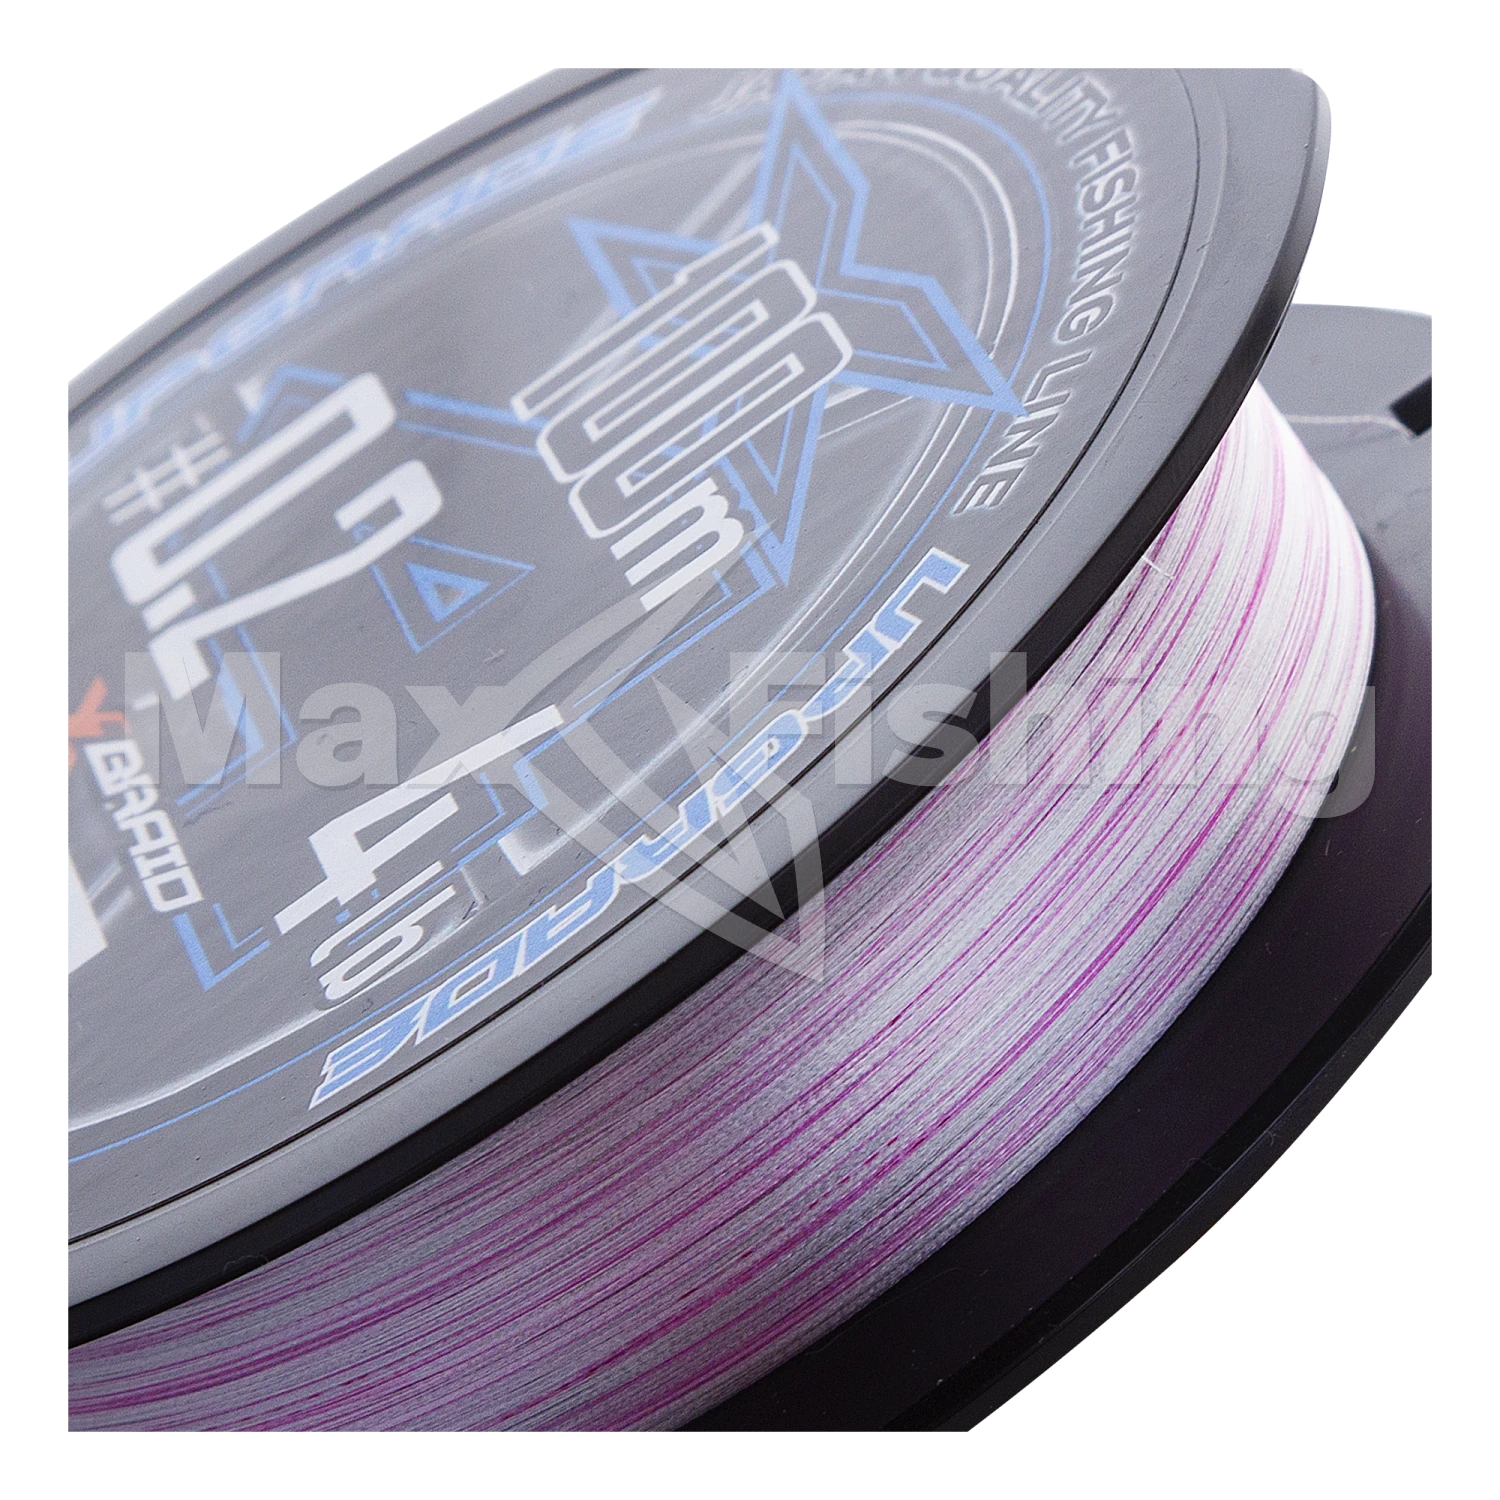 Шнур плетеный YGK X-Braid Upgrade PE X4 #0,2 0,074мм 100м (pink/white)